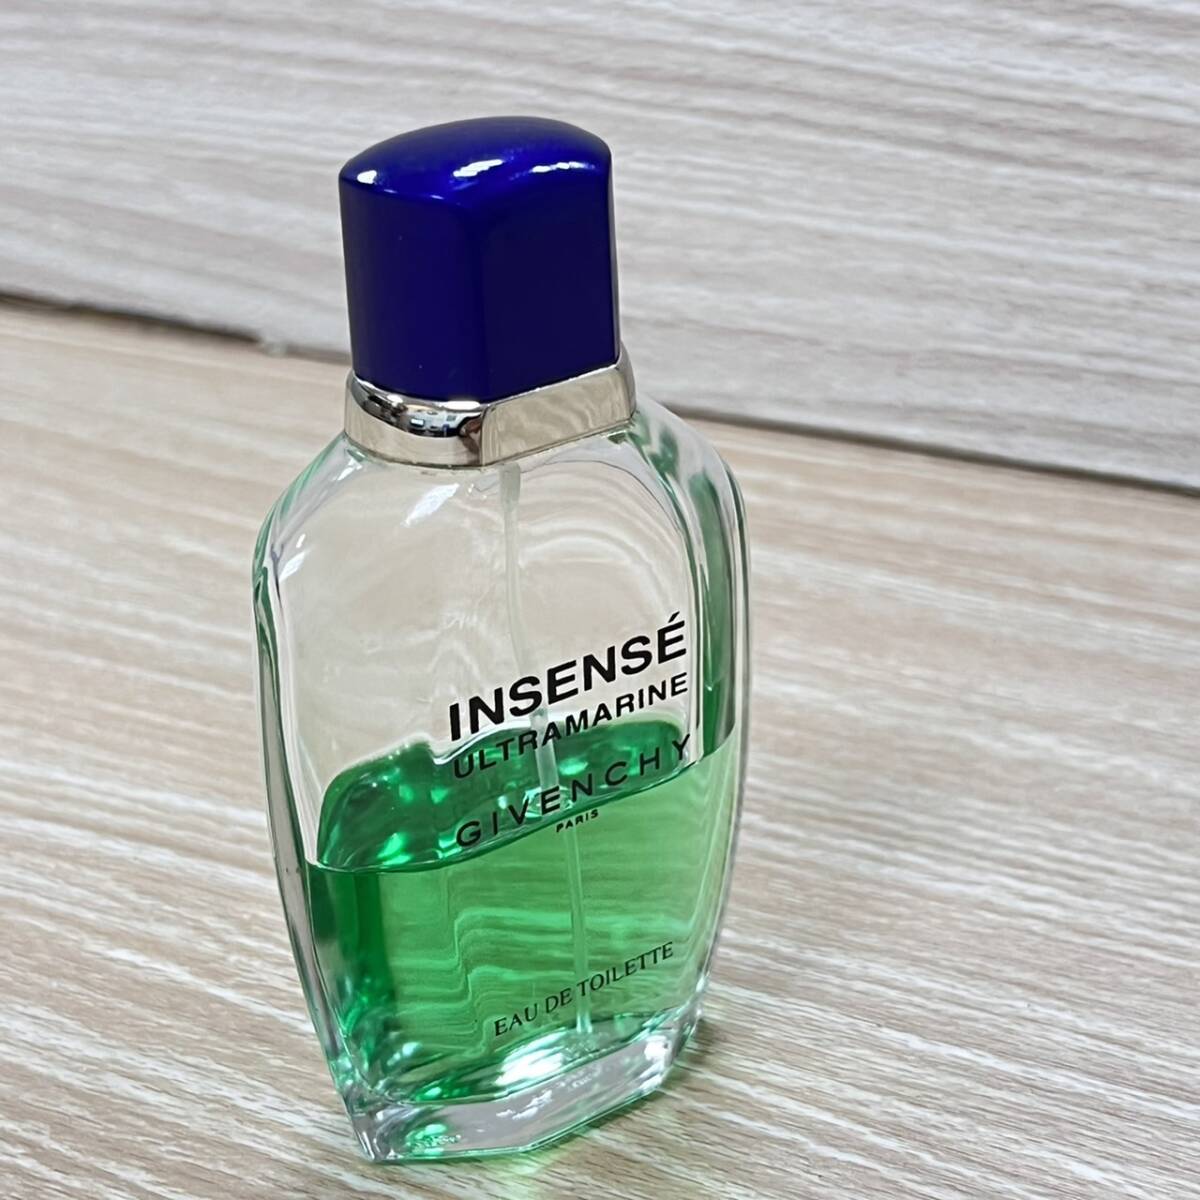  Givenchy GIVENCHY Ultra marine ULTRAMARINEo-doto crack EAU DE TOILETTE perfume 50ml fragrance [18278